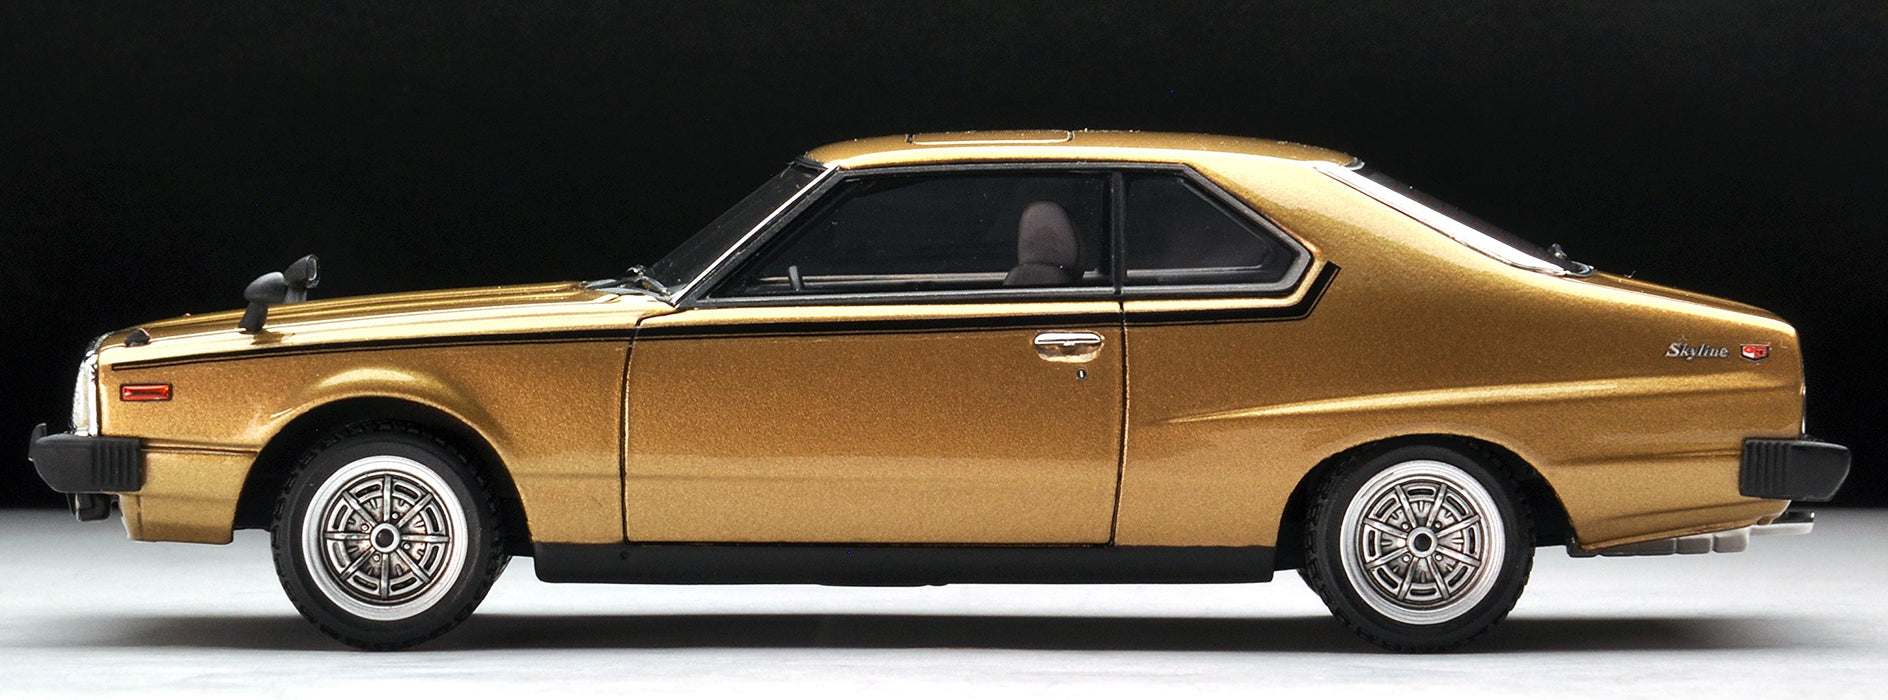 Tomytec Zündmodell Nissan Skyline 2000Gt-Es Maßstab 1/43 Goldenes Auto Fertigprodukt